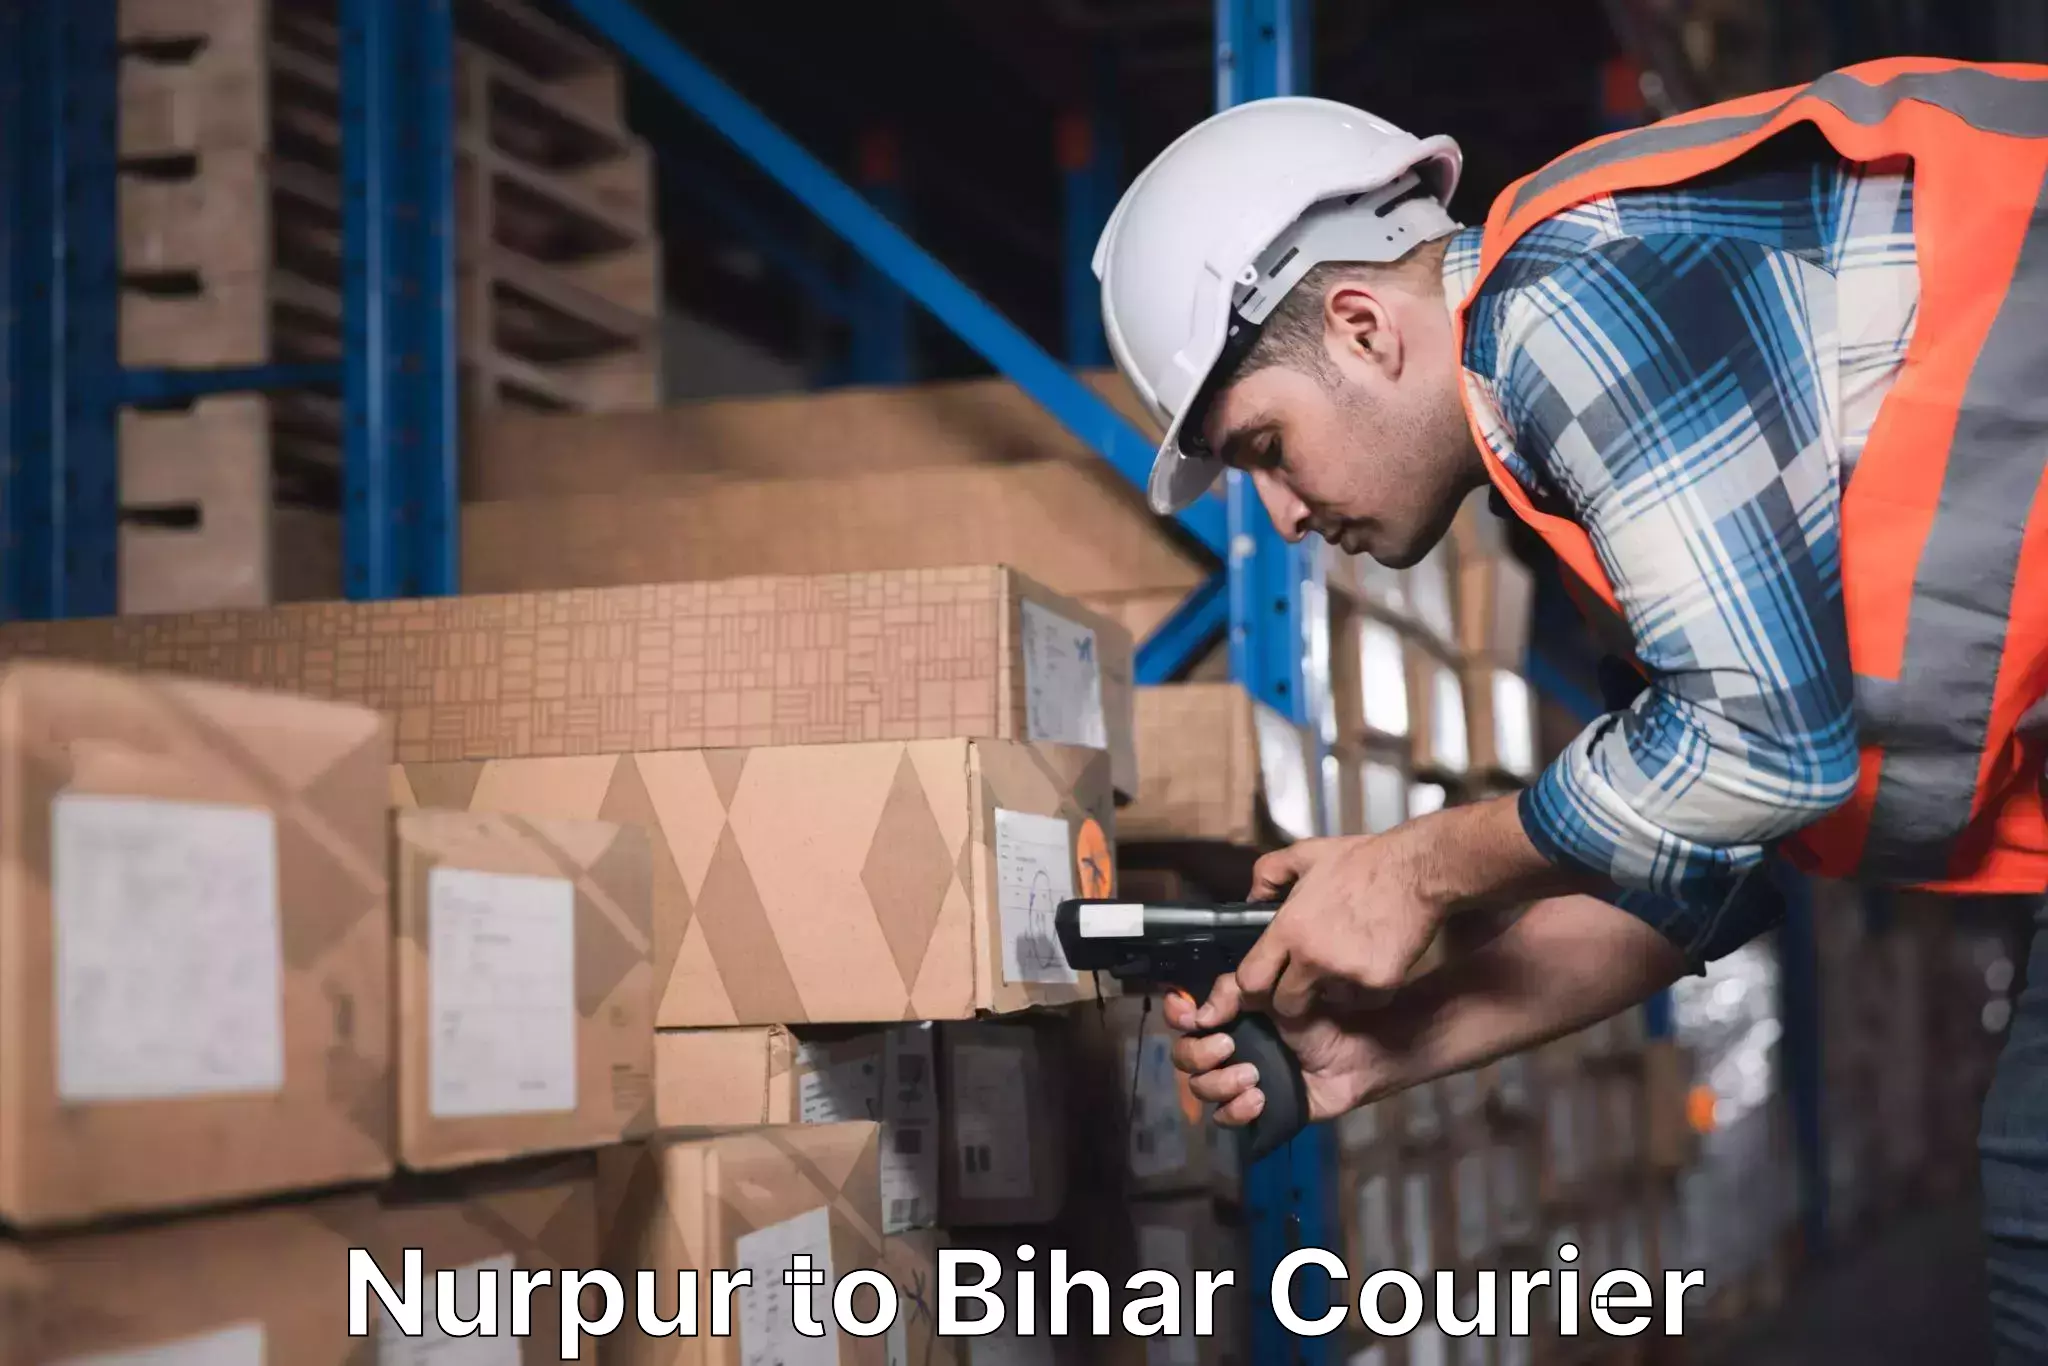 Express mail service Nurpur to Bihar